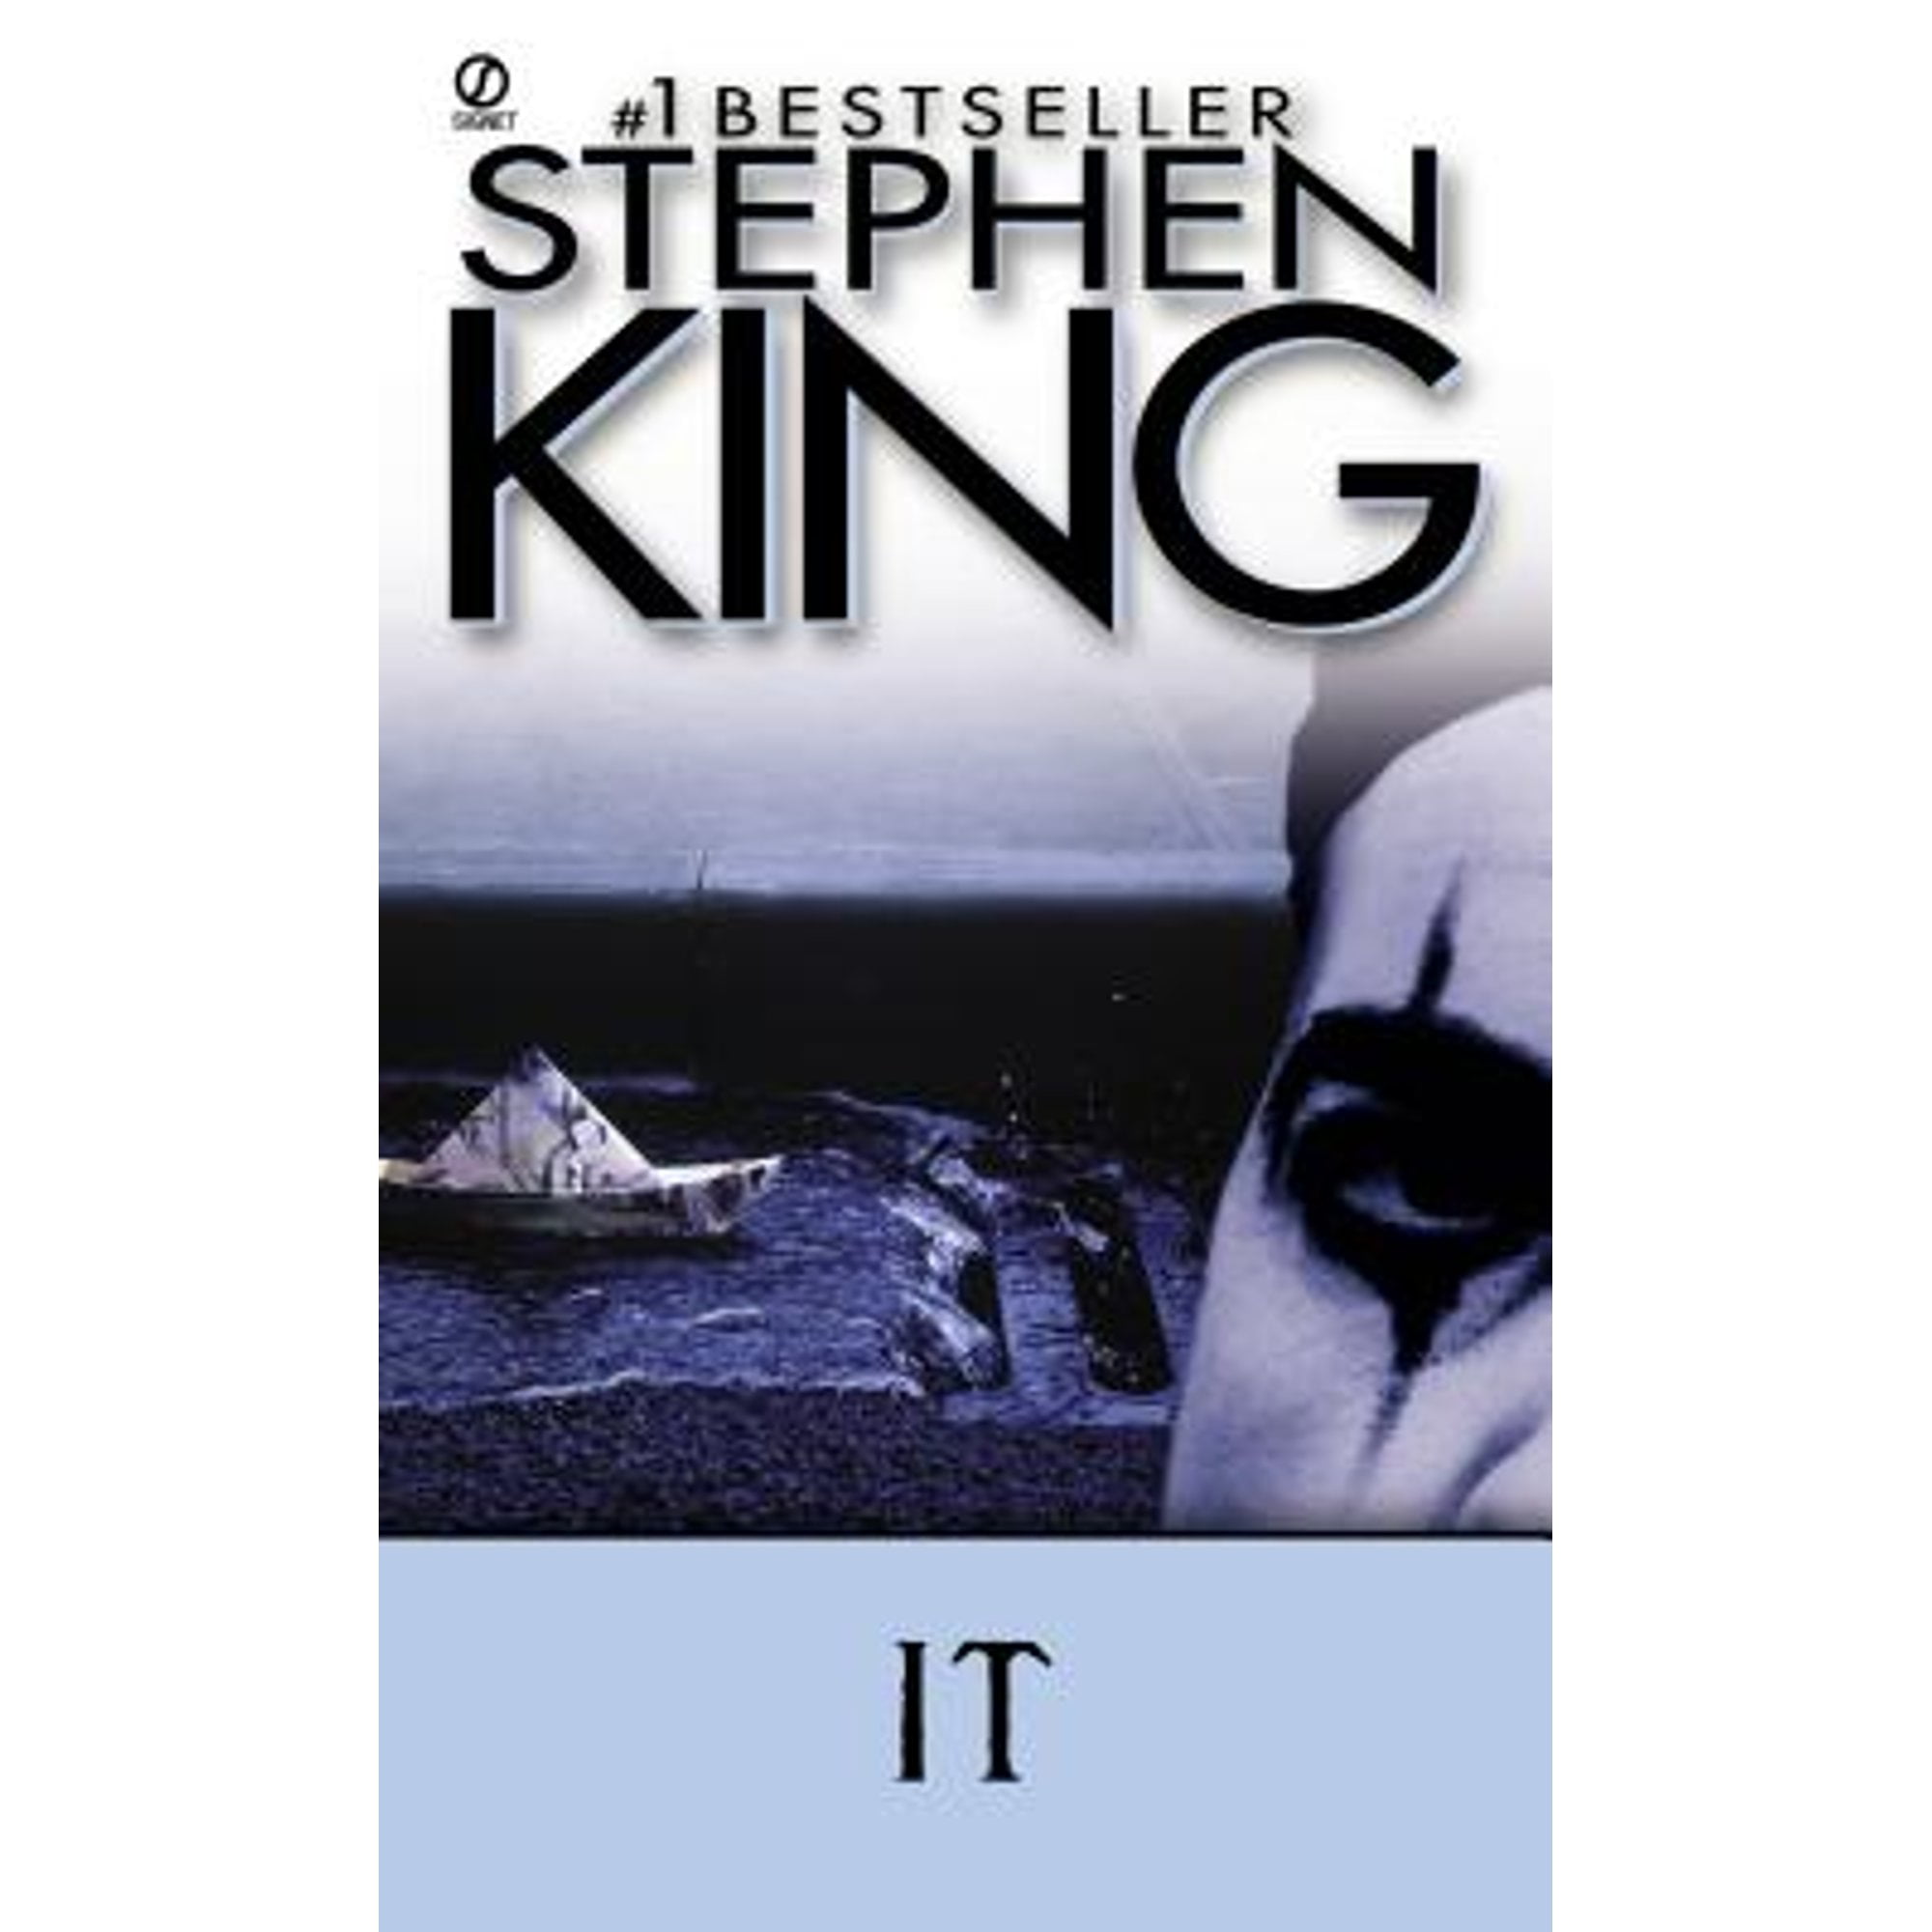 Stephen King Illustrated Companion' worth price